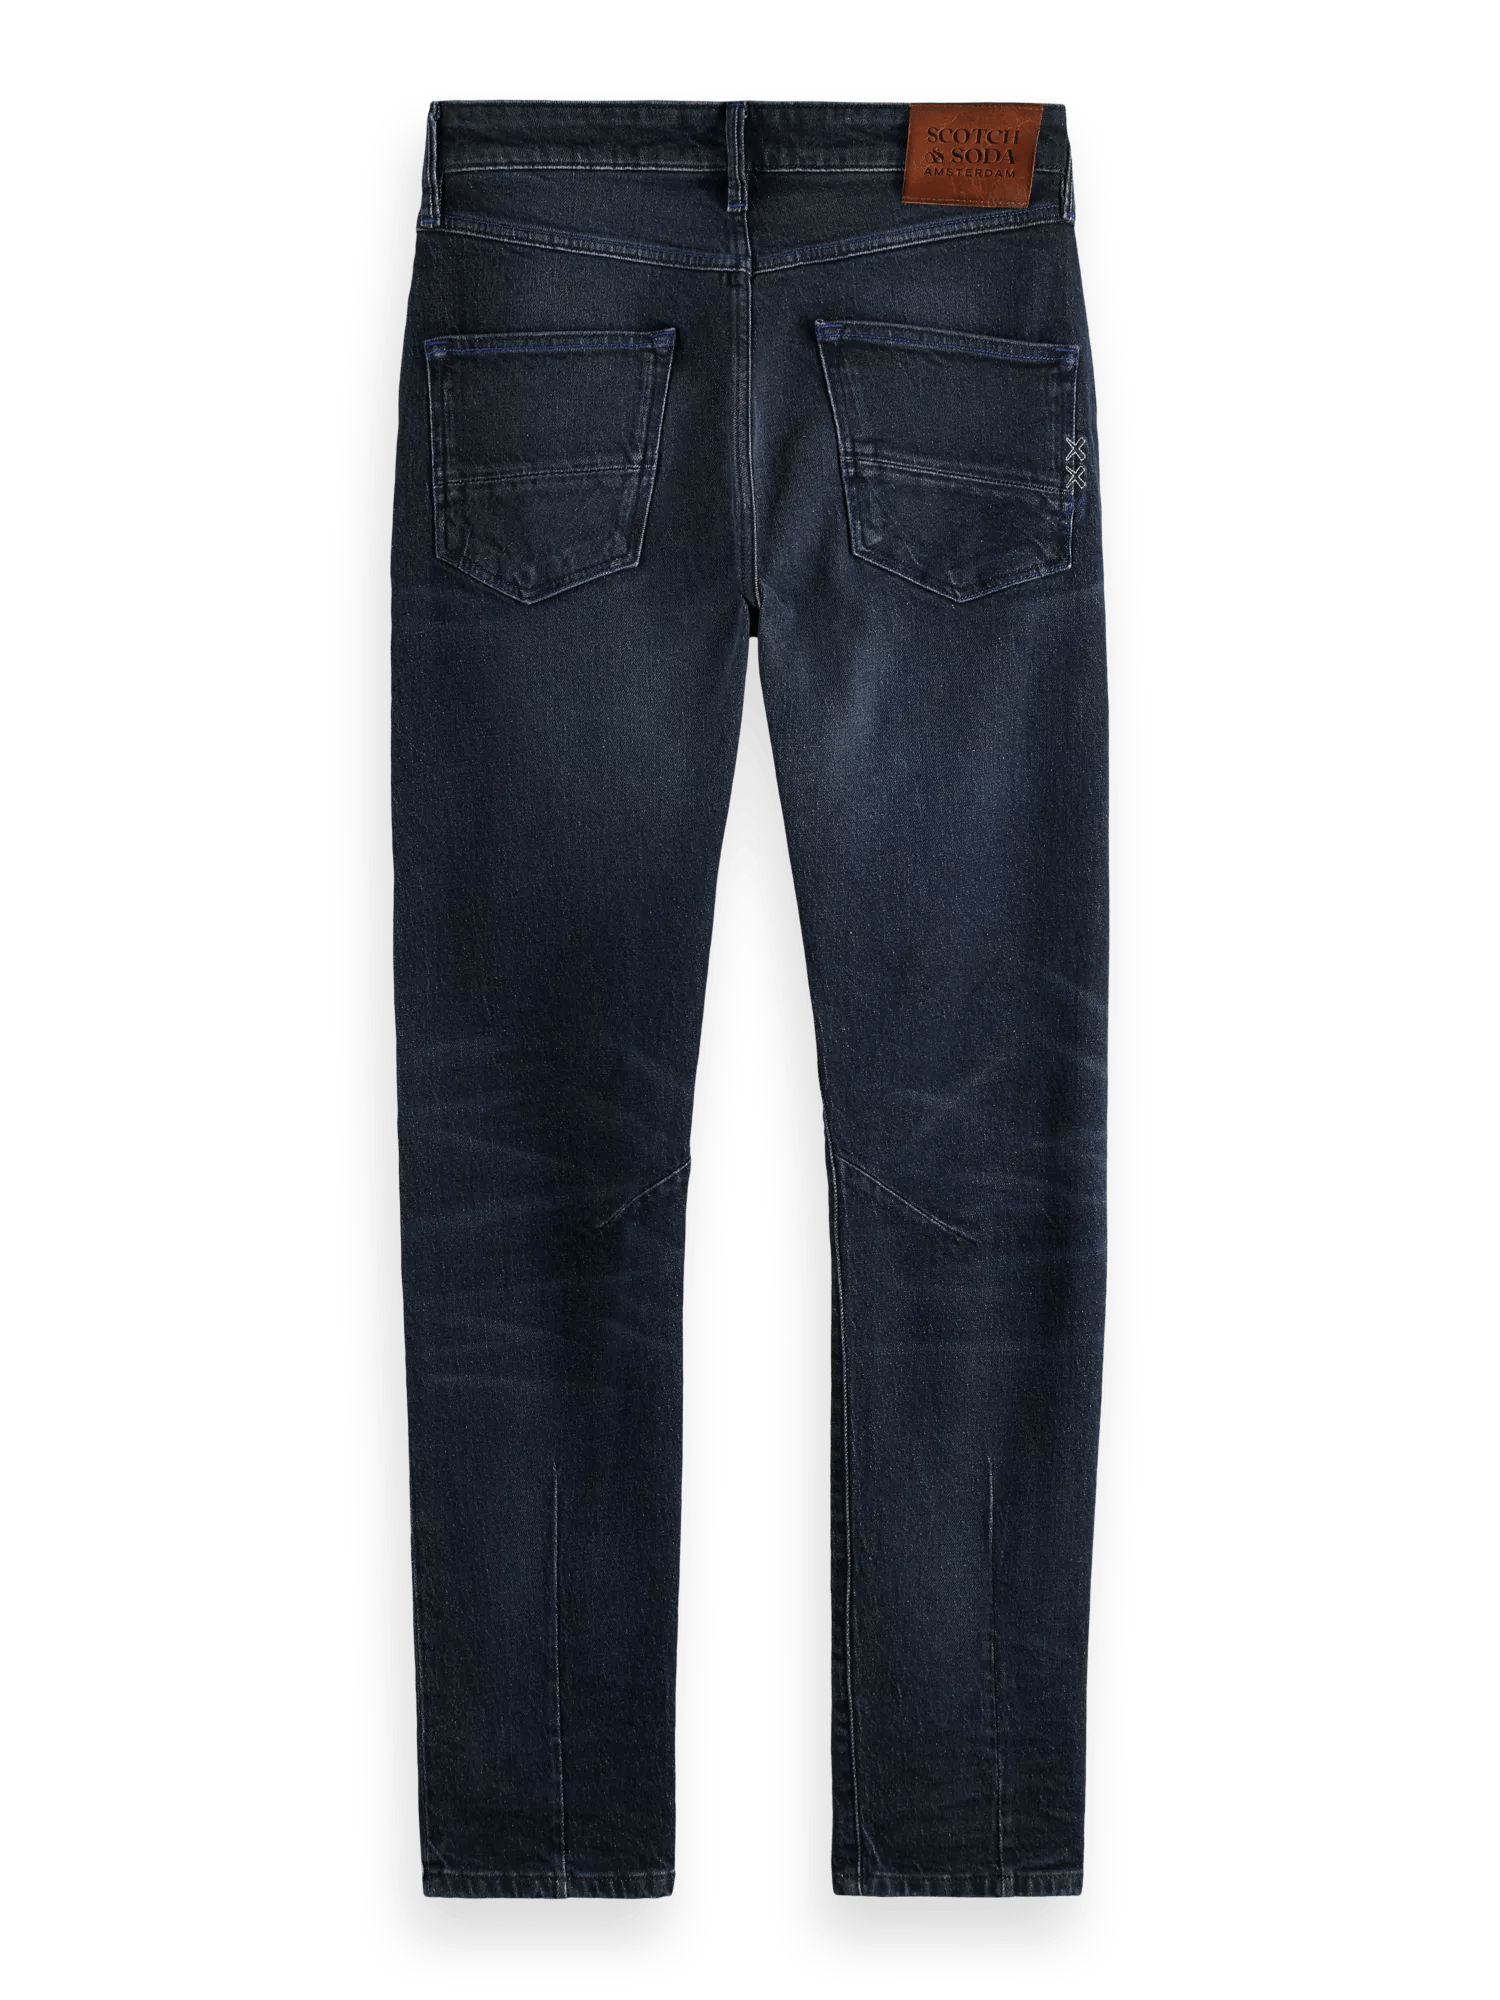 Scotch & Soda The Singel Slim Tapered Fit Jeans – Skygazer BCK